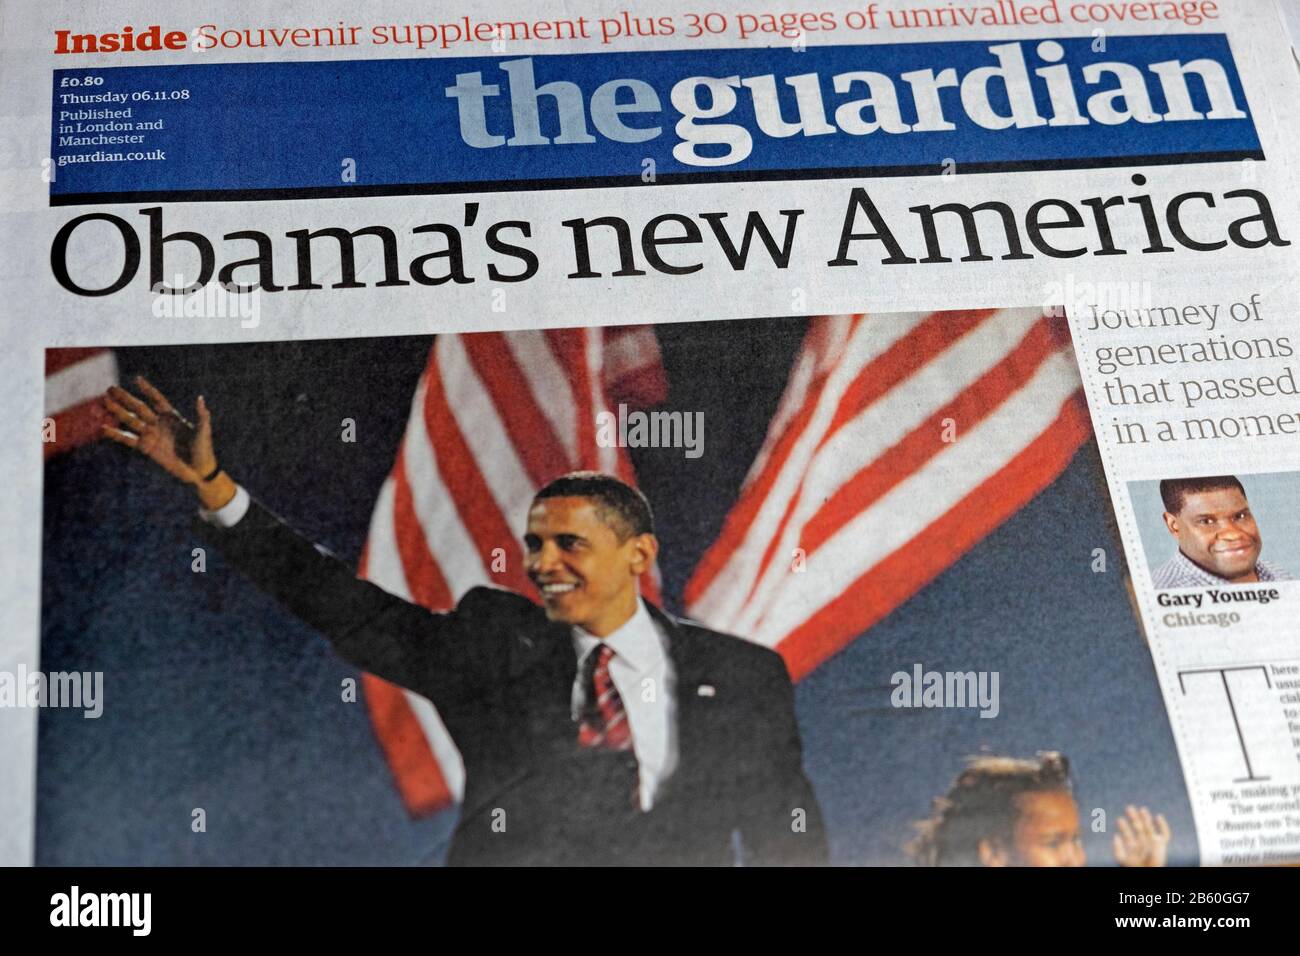 President Barack Obama on the front page of the Guardian newspaper "Obama's  new America" headline on 6 November 2008 London UK Stock Photo - Alamy